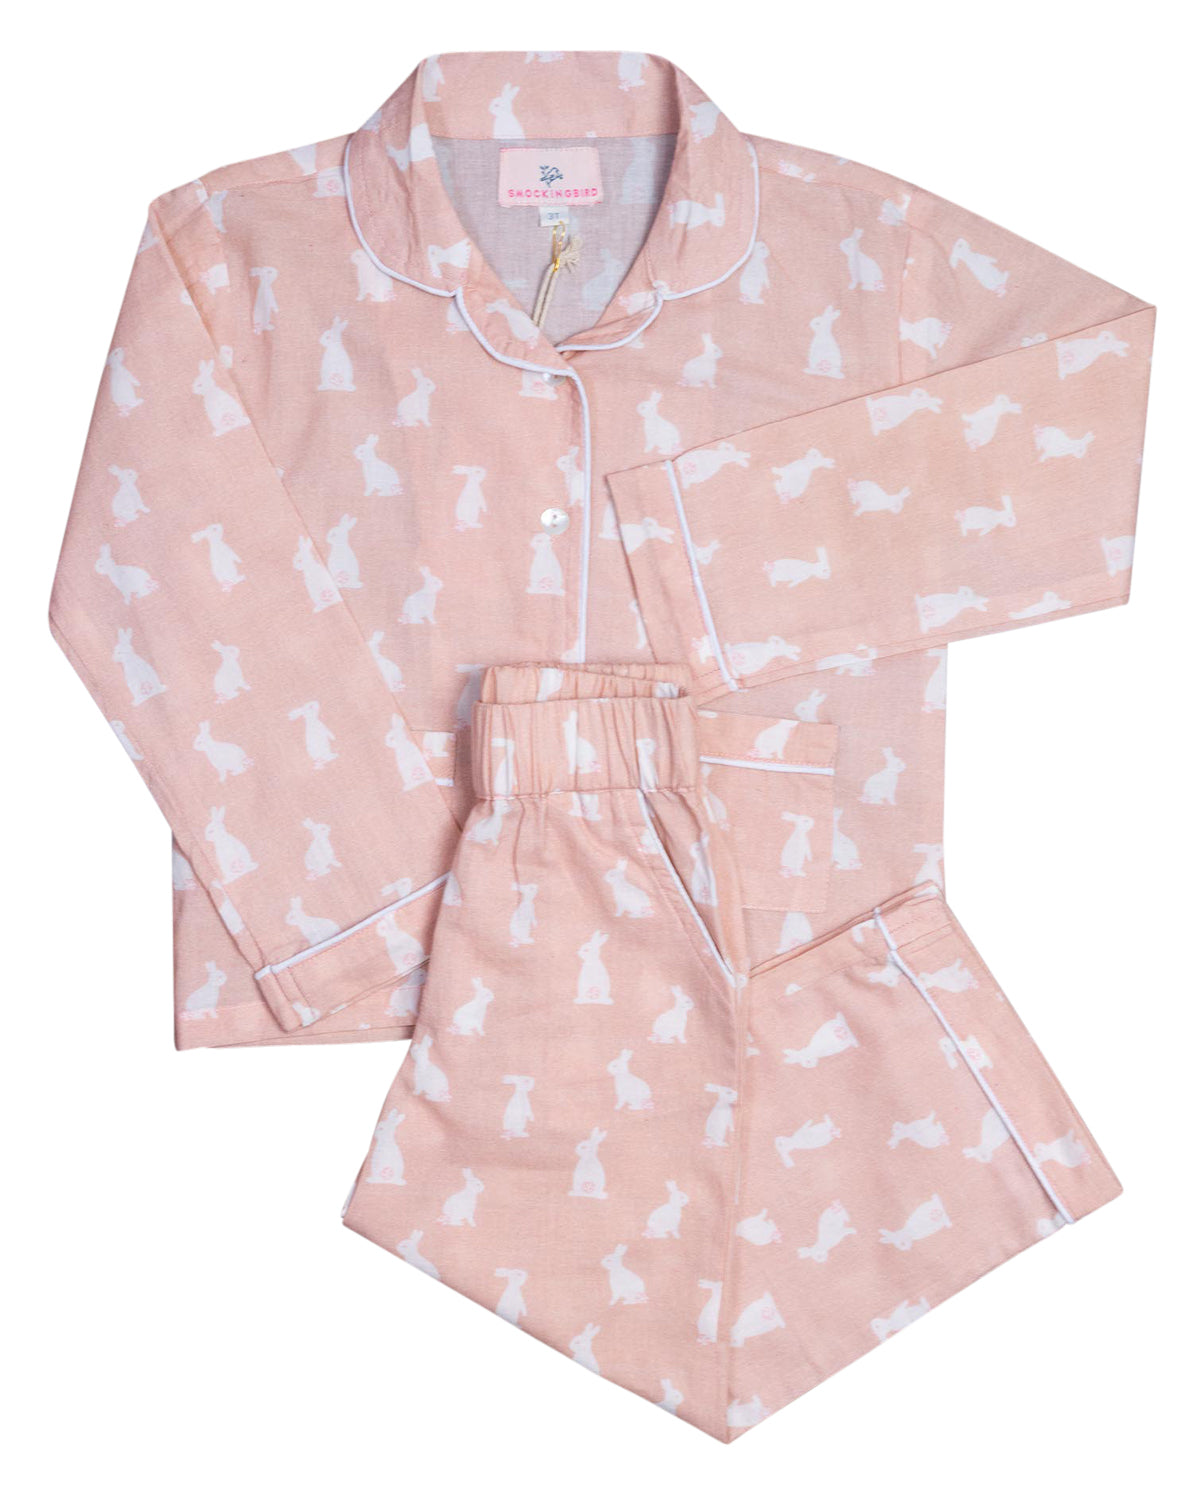 Hoppy Bunny Pink Pajama Set